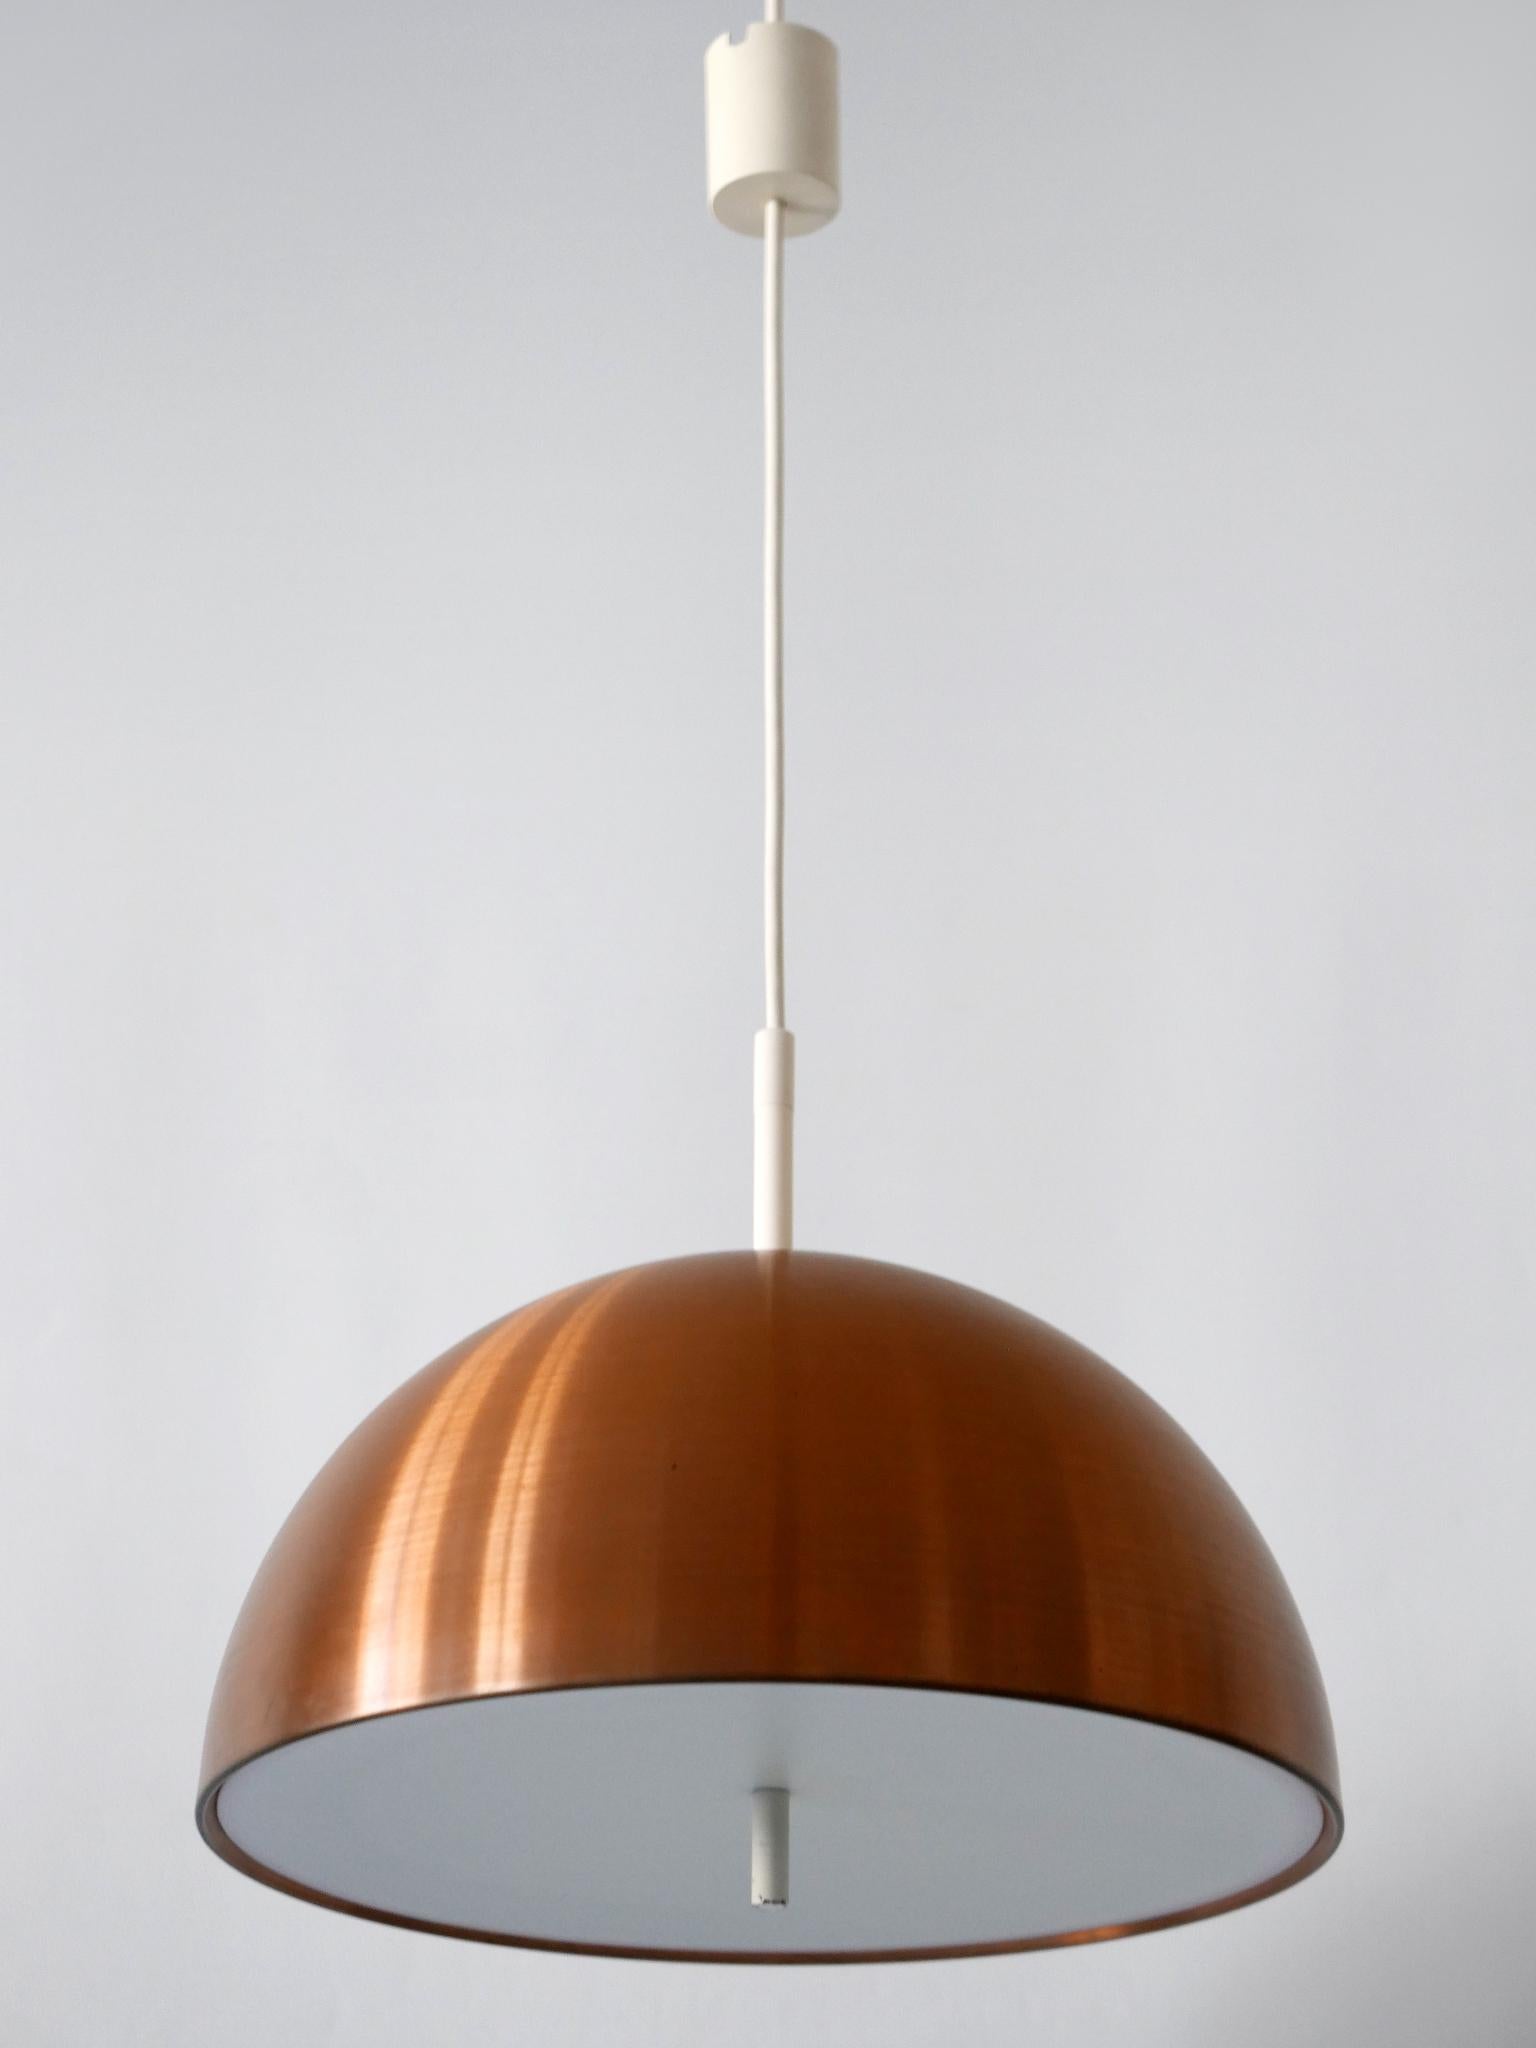 Elegant Mid-Century Modern Copper Pendant Lamp by Staff & Schwarz Germany, 1960s For Sale 10